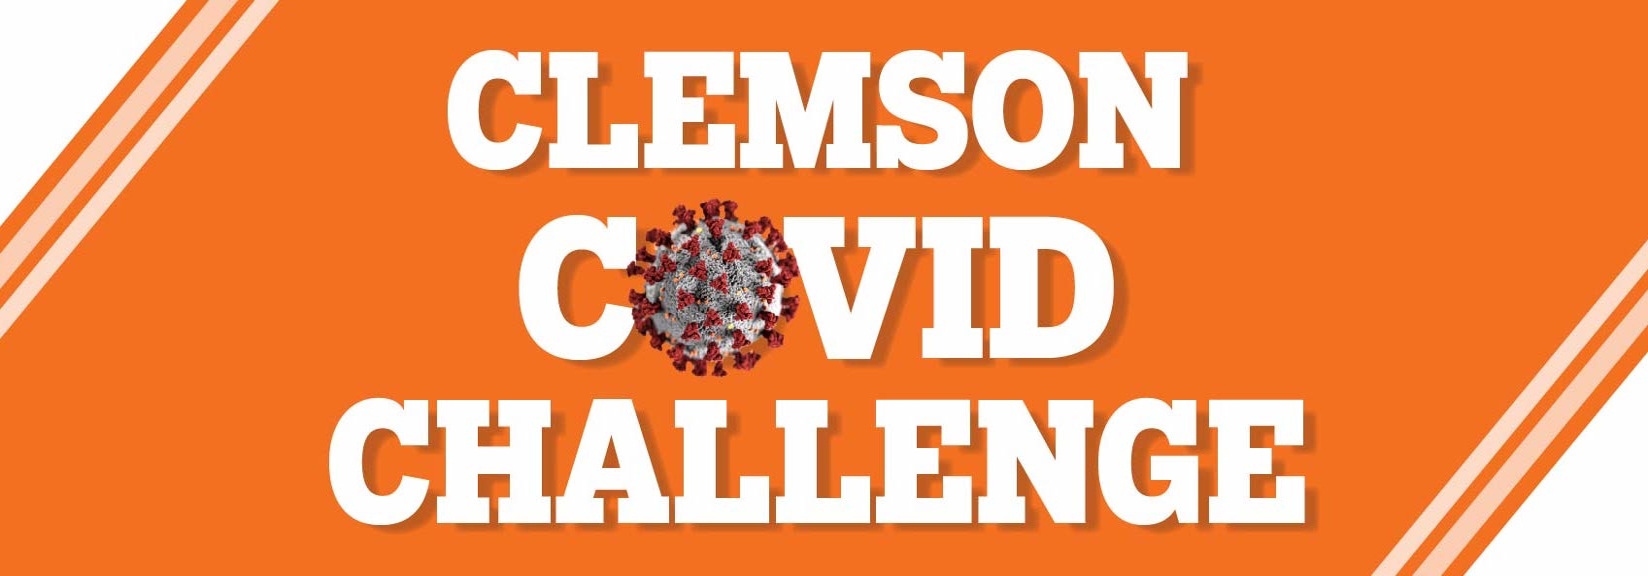 clemson COVID challenge